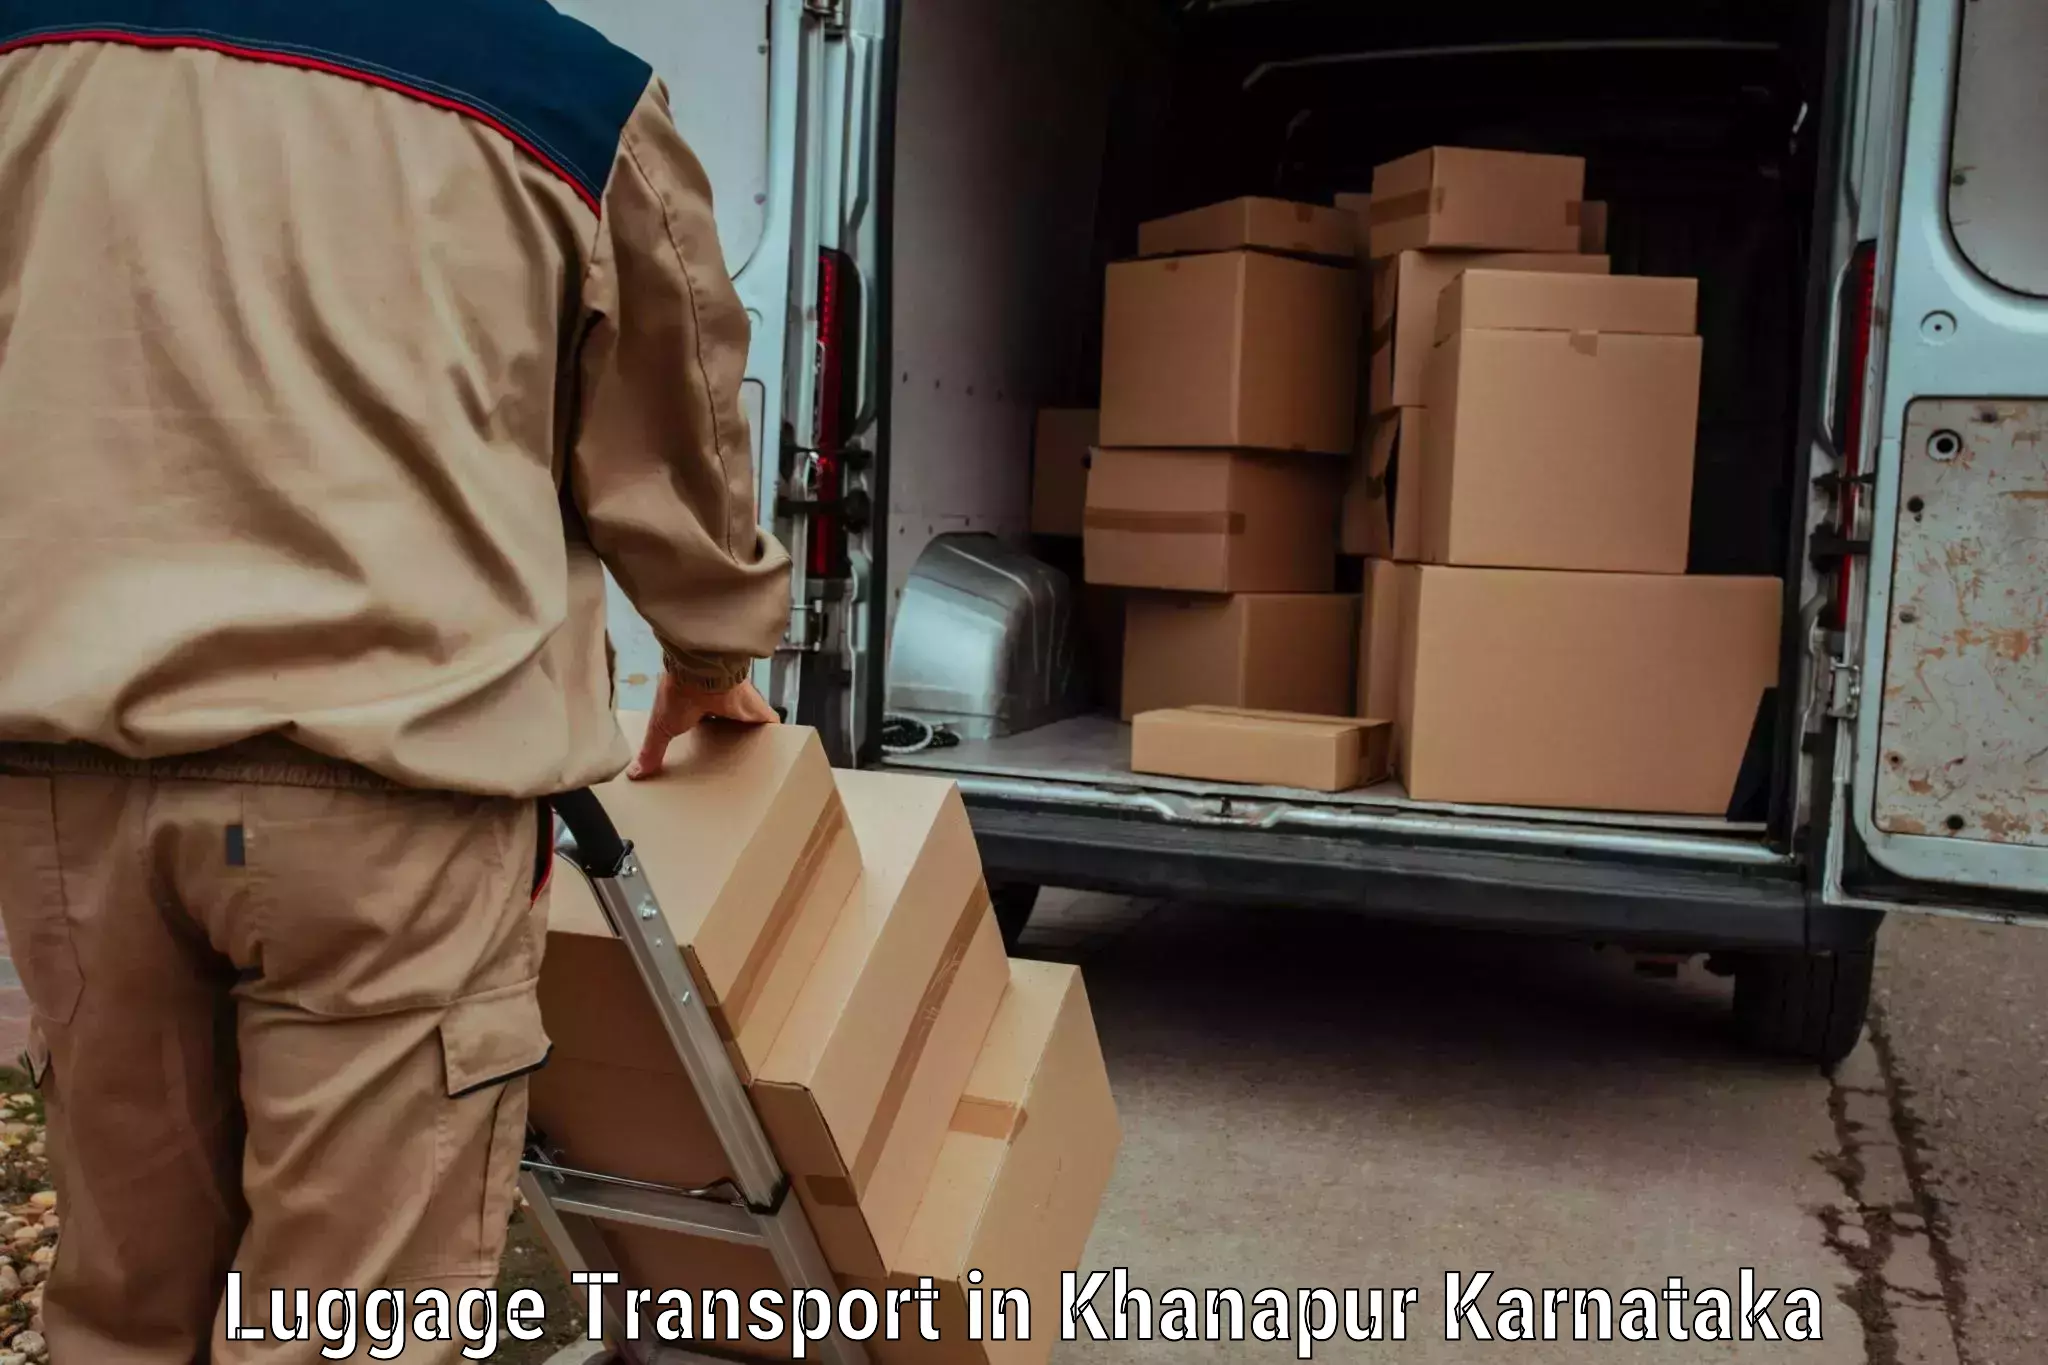 Baggage transport services in Khanapur Karnataka